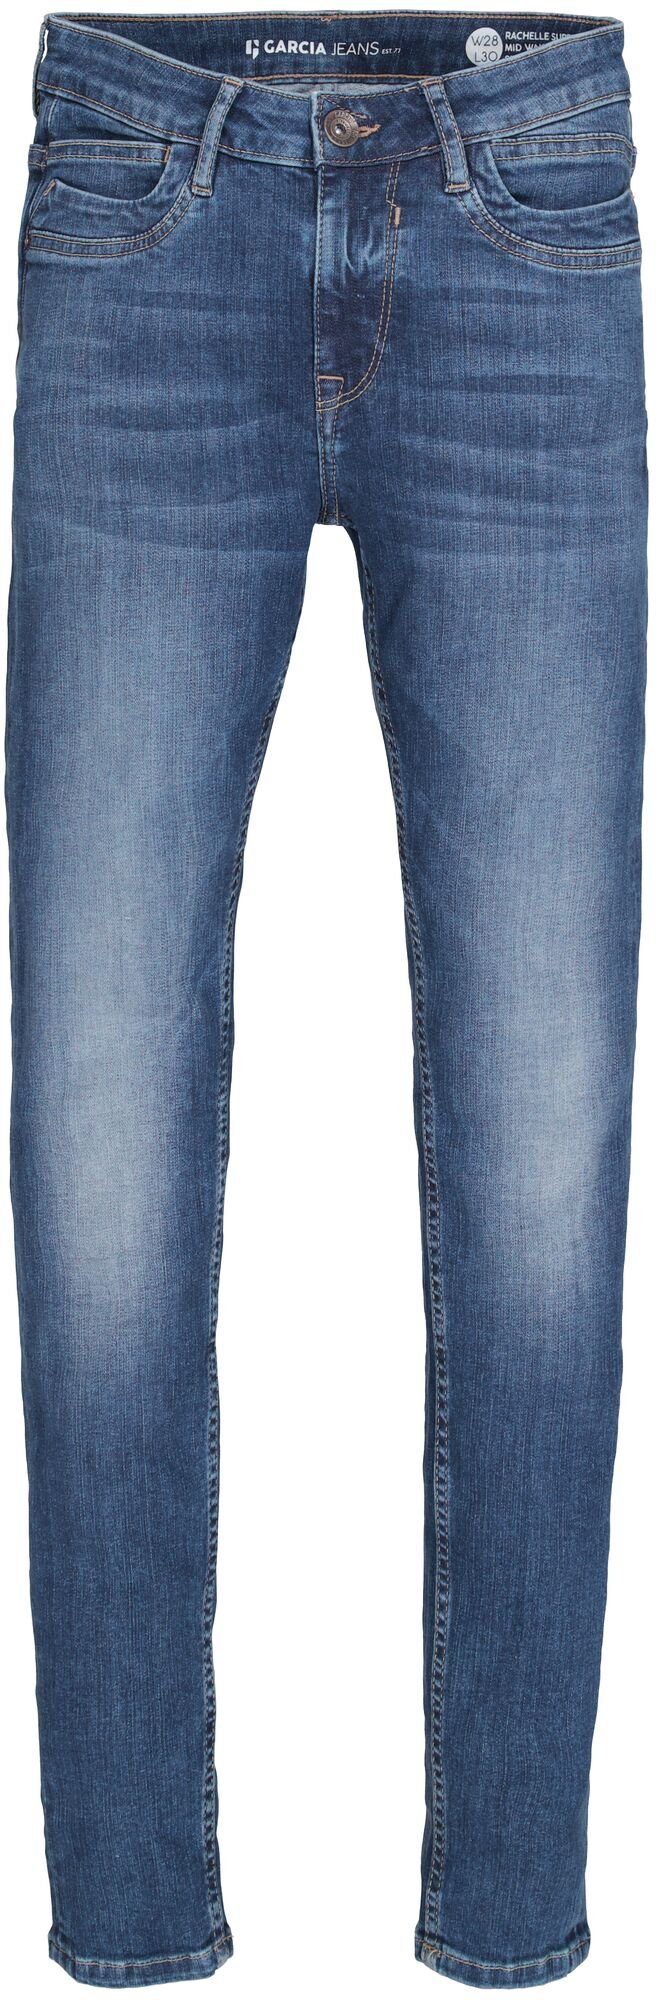 GARCIA Stretch-Jeans midblue GARCIA 279.6320 medium RACHELLE used JEANS